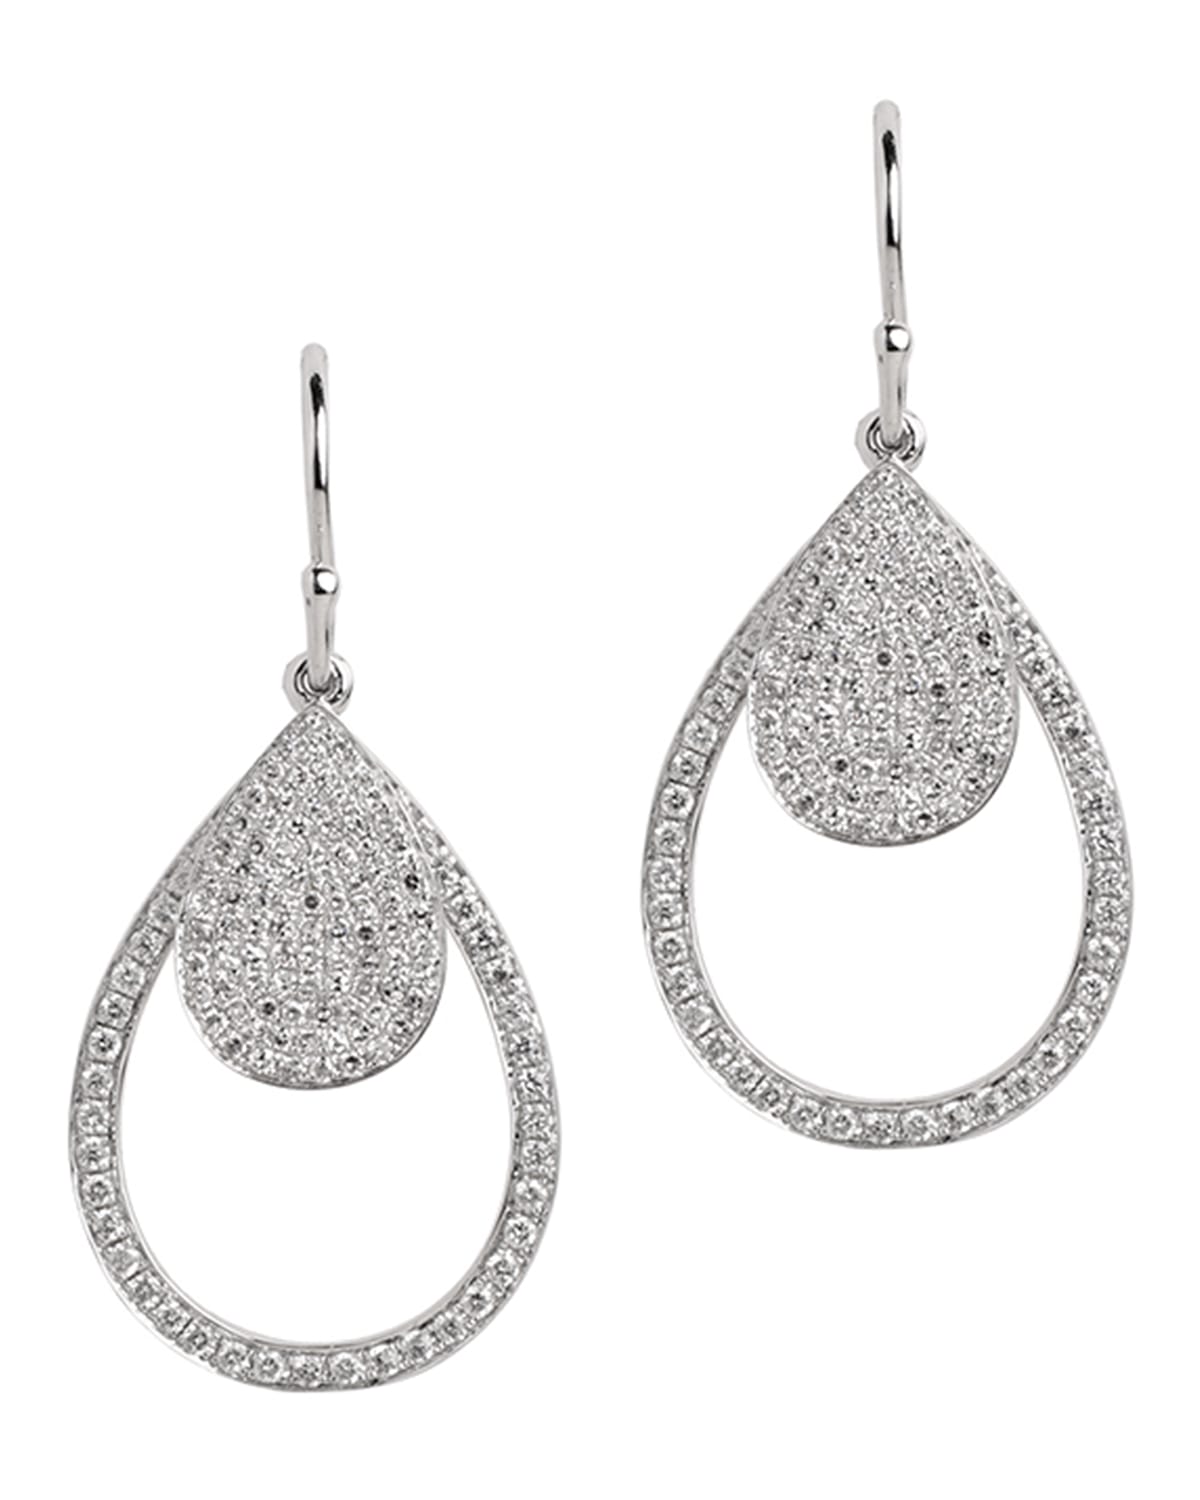 Bridget King Jewelry Mini Pave and Small Diamond Teardrop Earrings